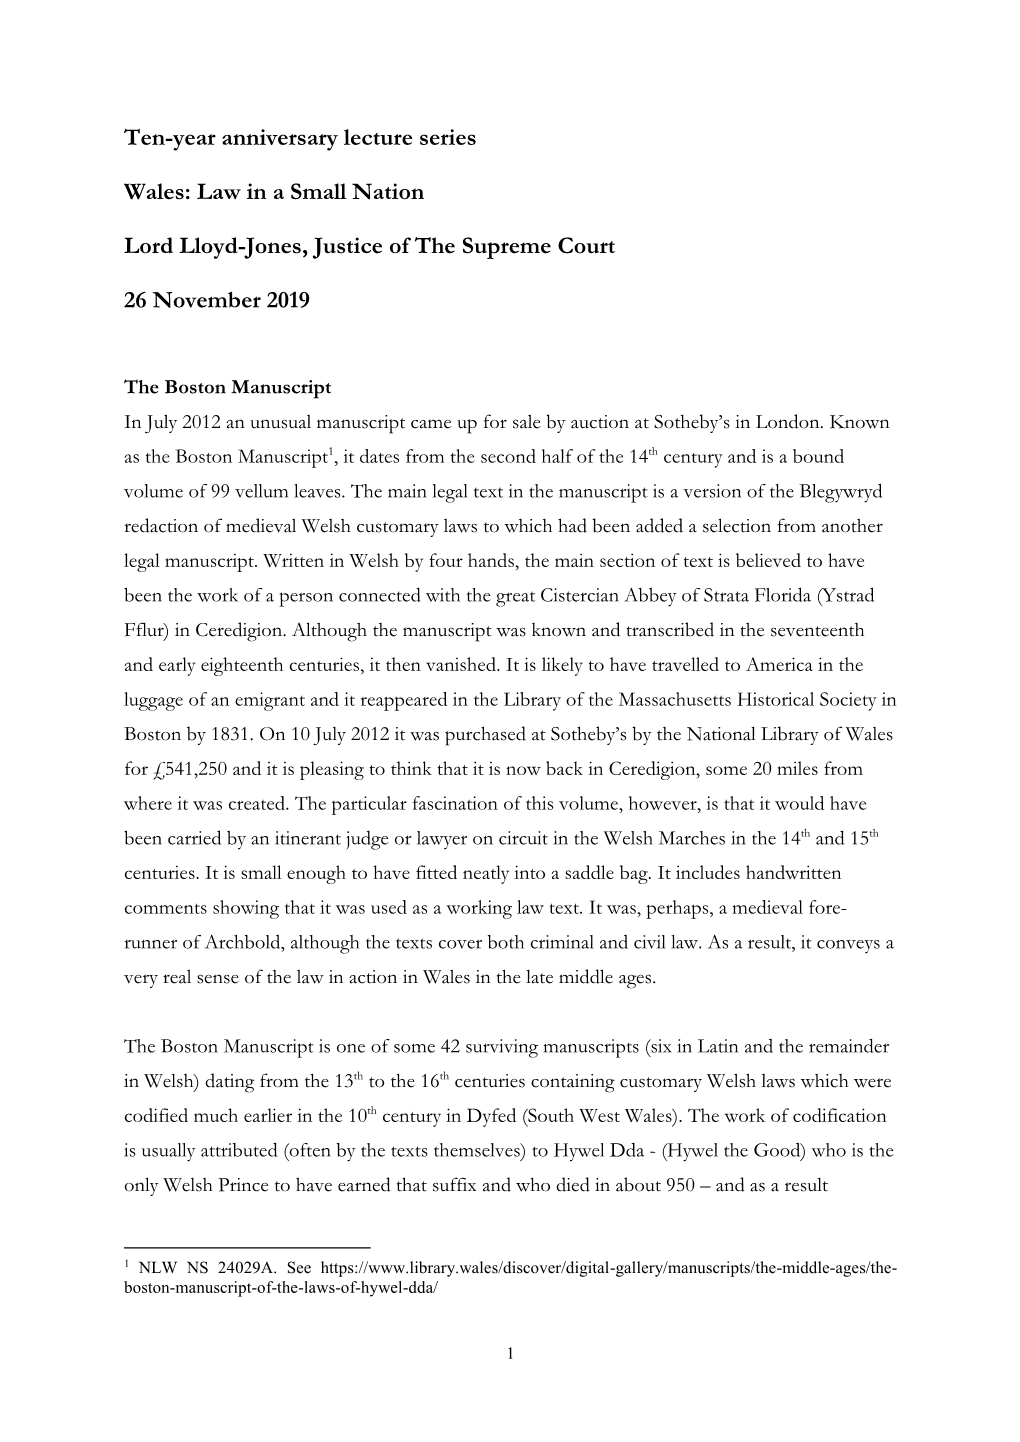 Read Full Transcript of Lord Lloyd-Jones's Lecture